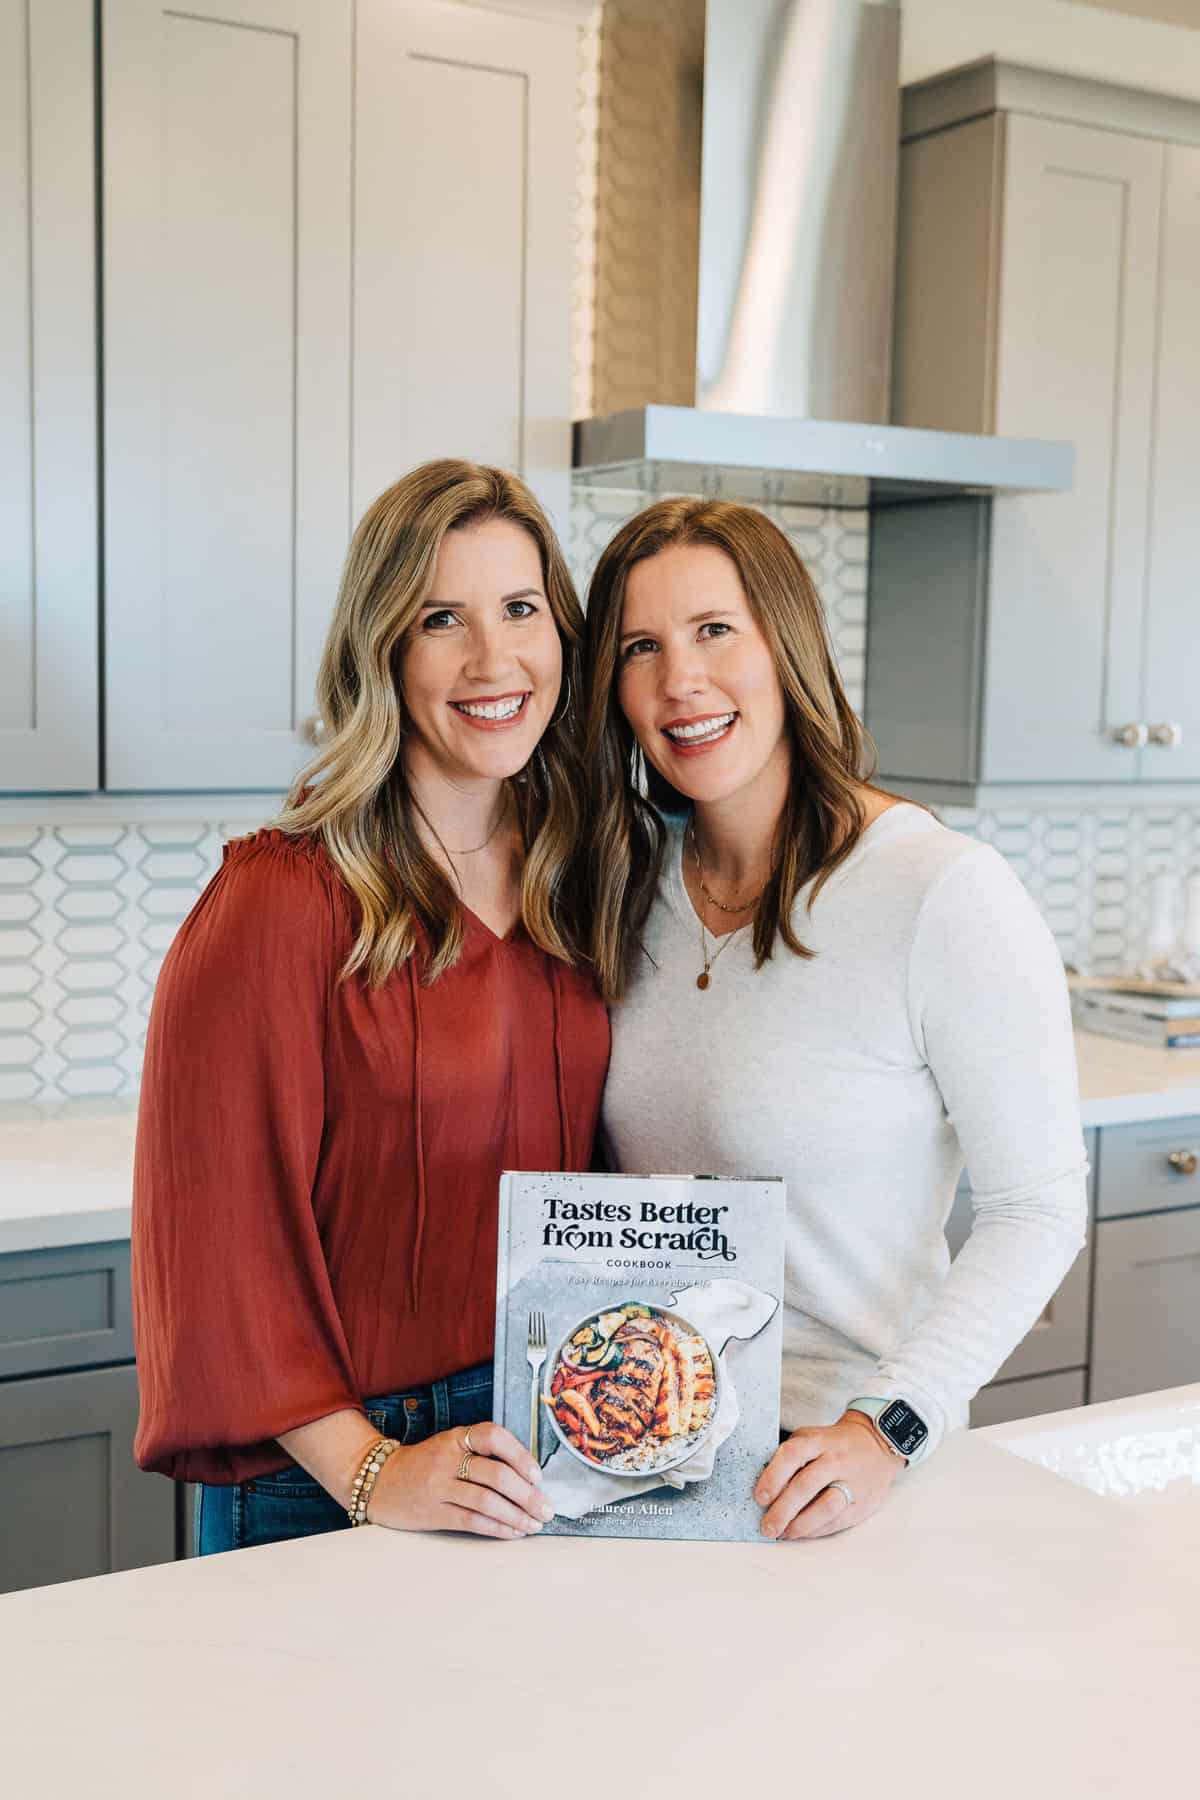 Liz and Lauren and the TBFS cookbook